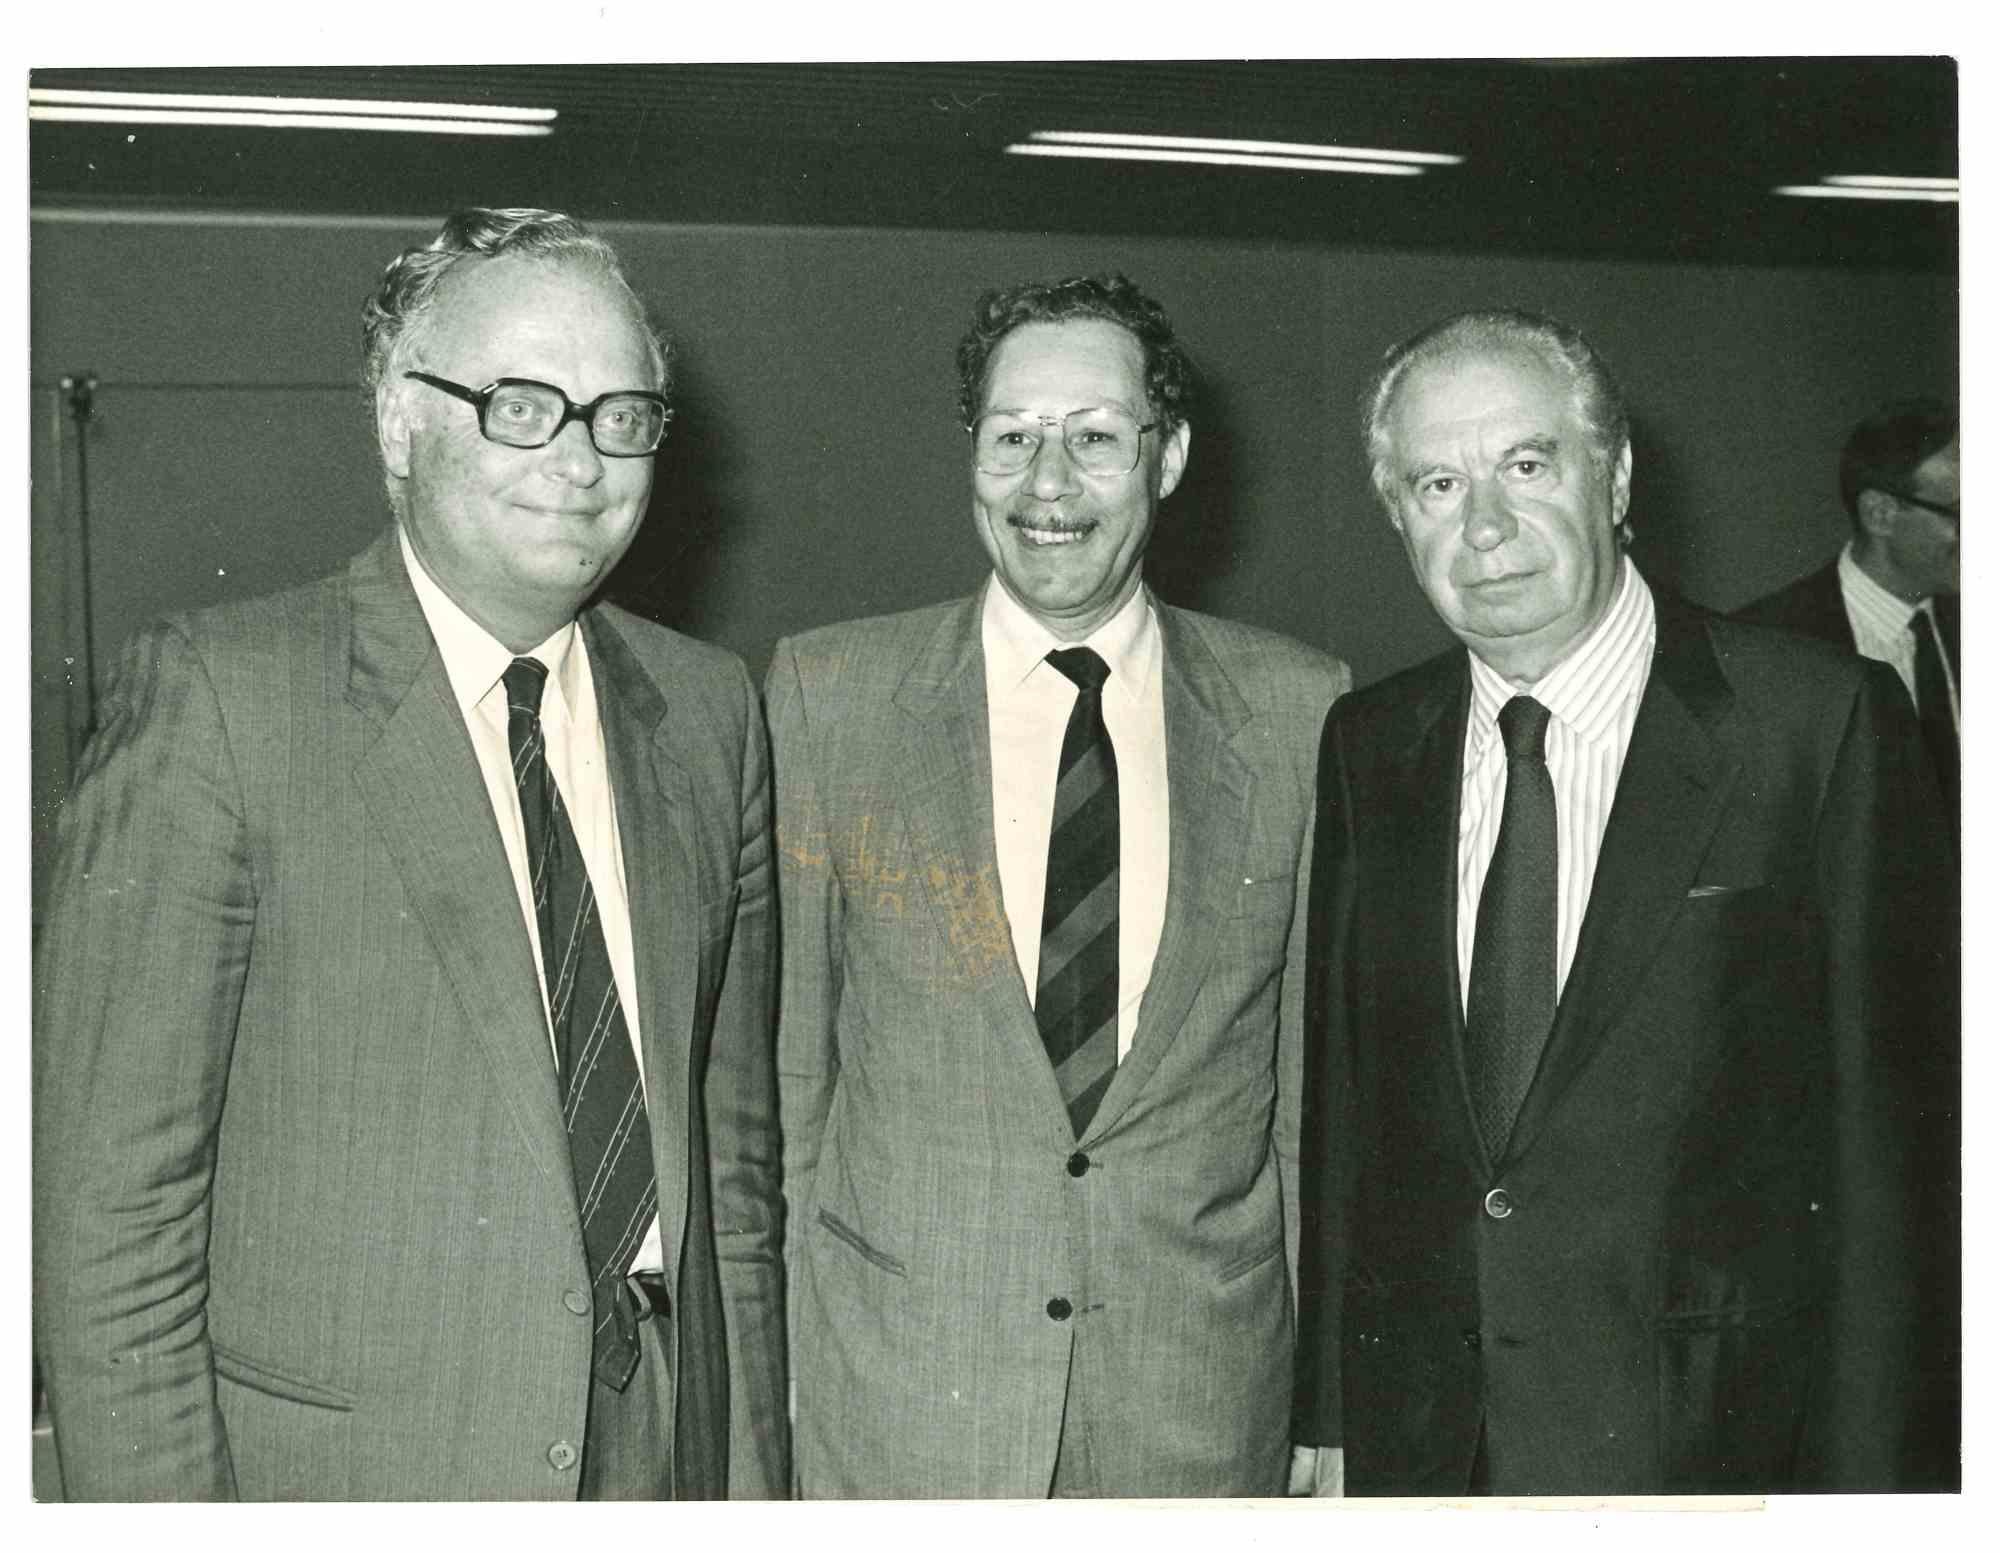 Franco Reviglio, Belkacem Nabi and Clelio Darida - 1986